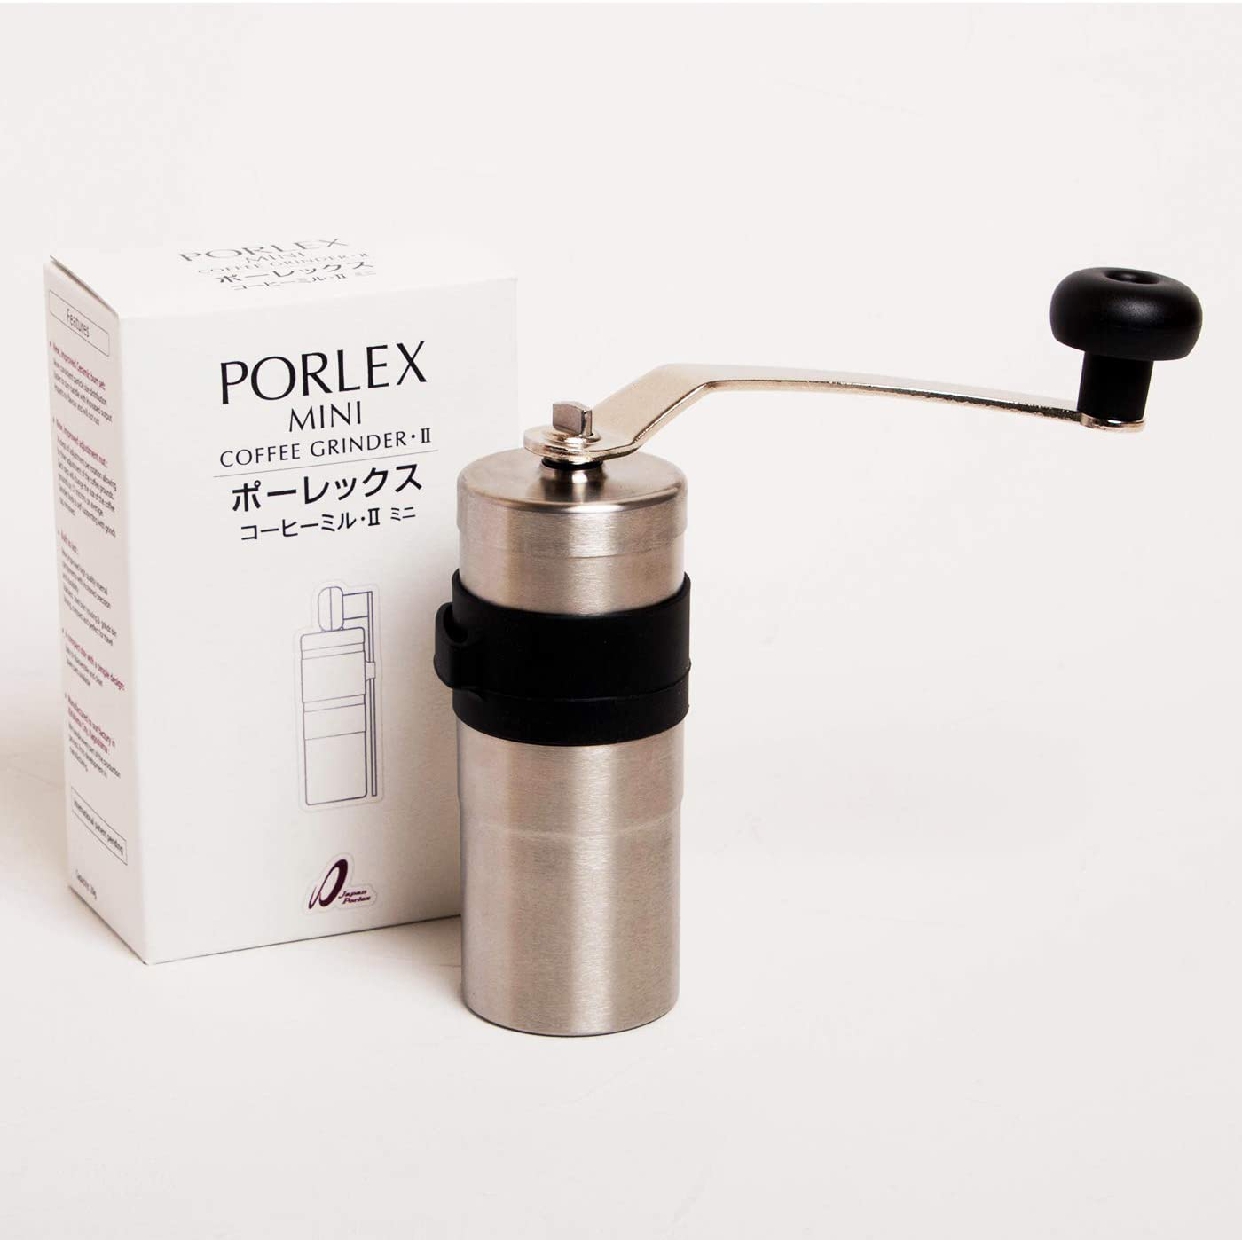 PORLEX(ポーレックス) コーヒーミル･Ⅱミニの商品画像3 